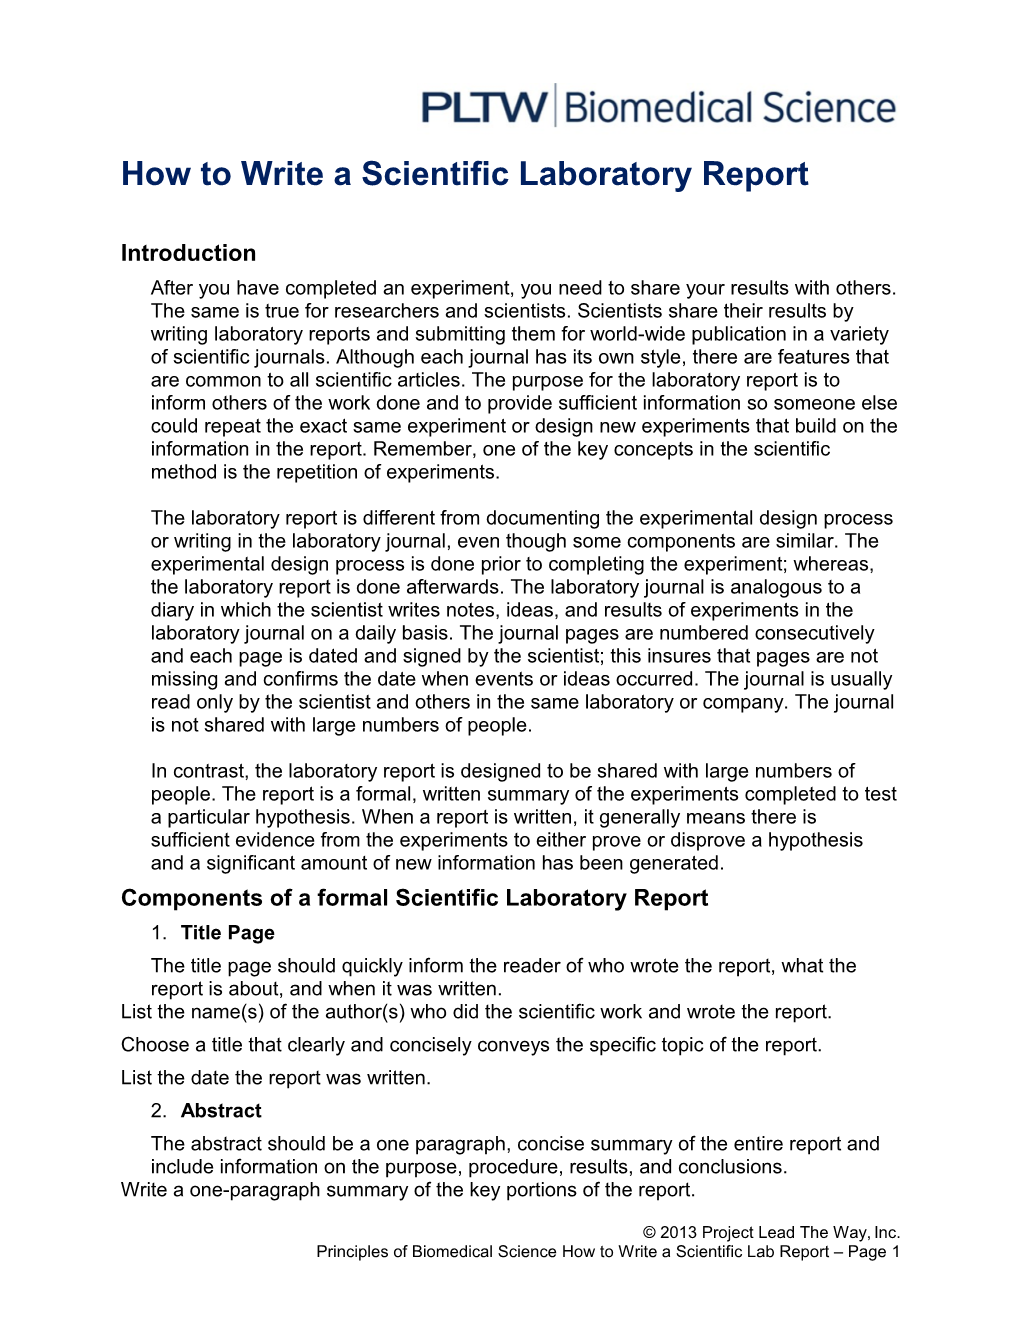 How to Write a Scientific Laboratory Report